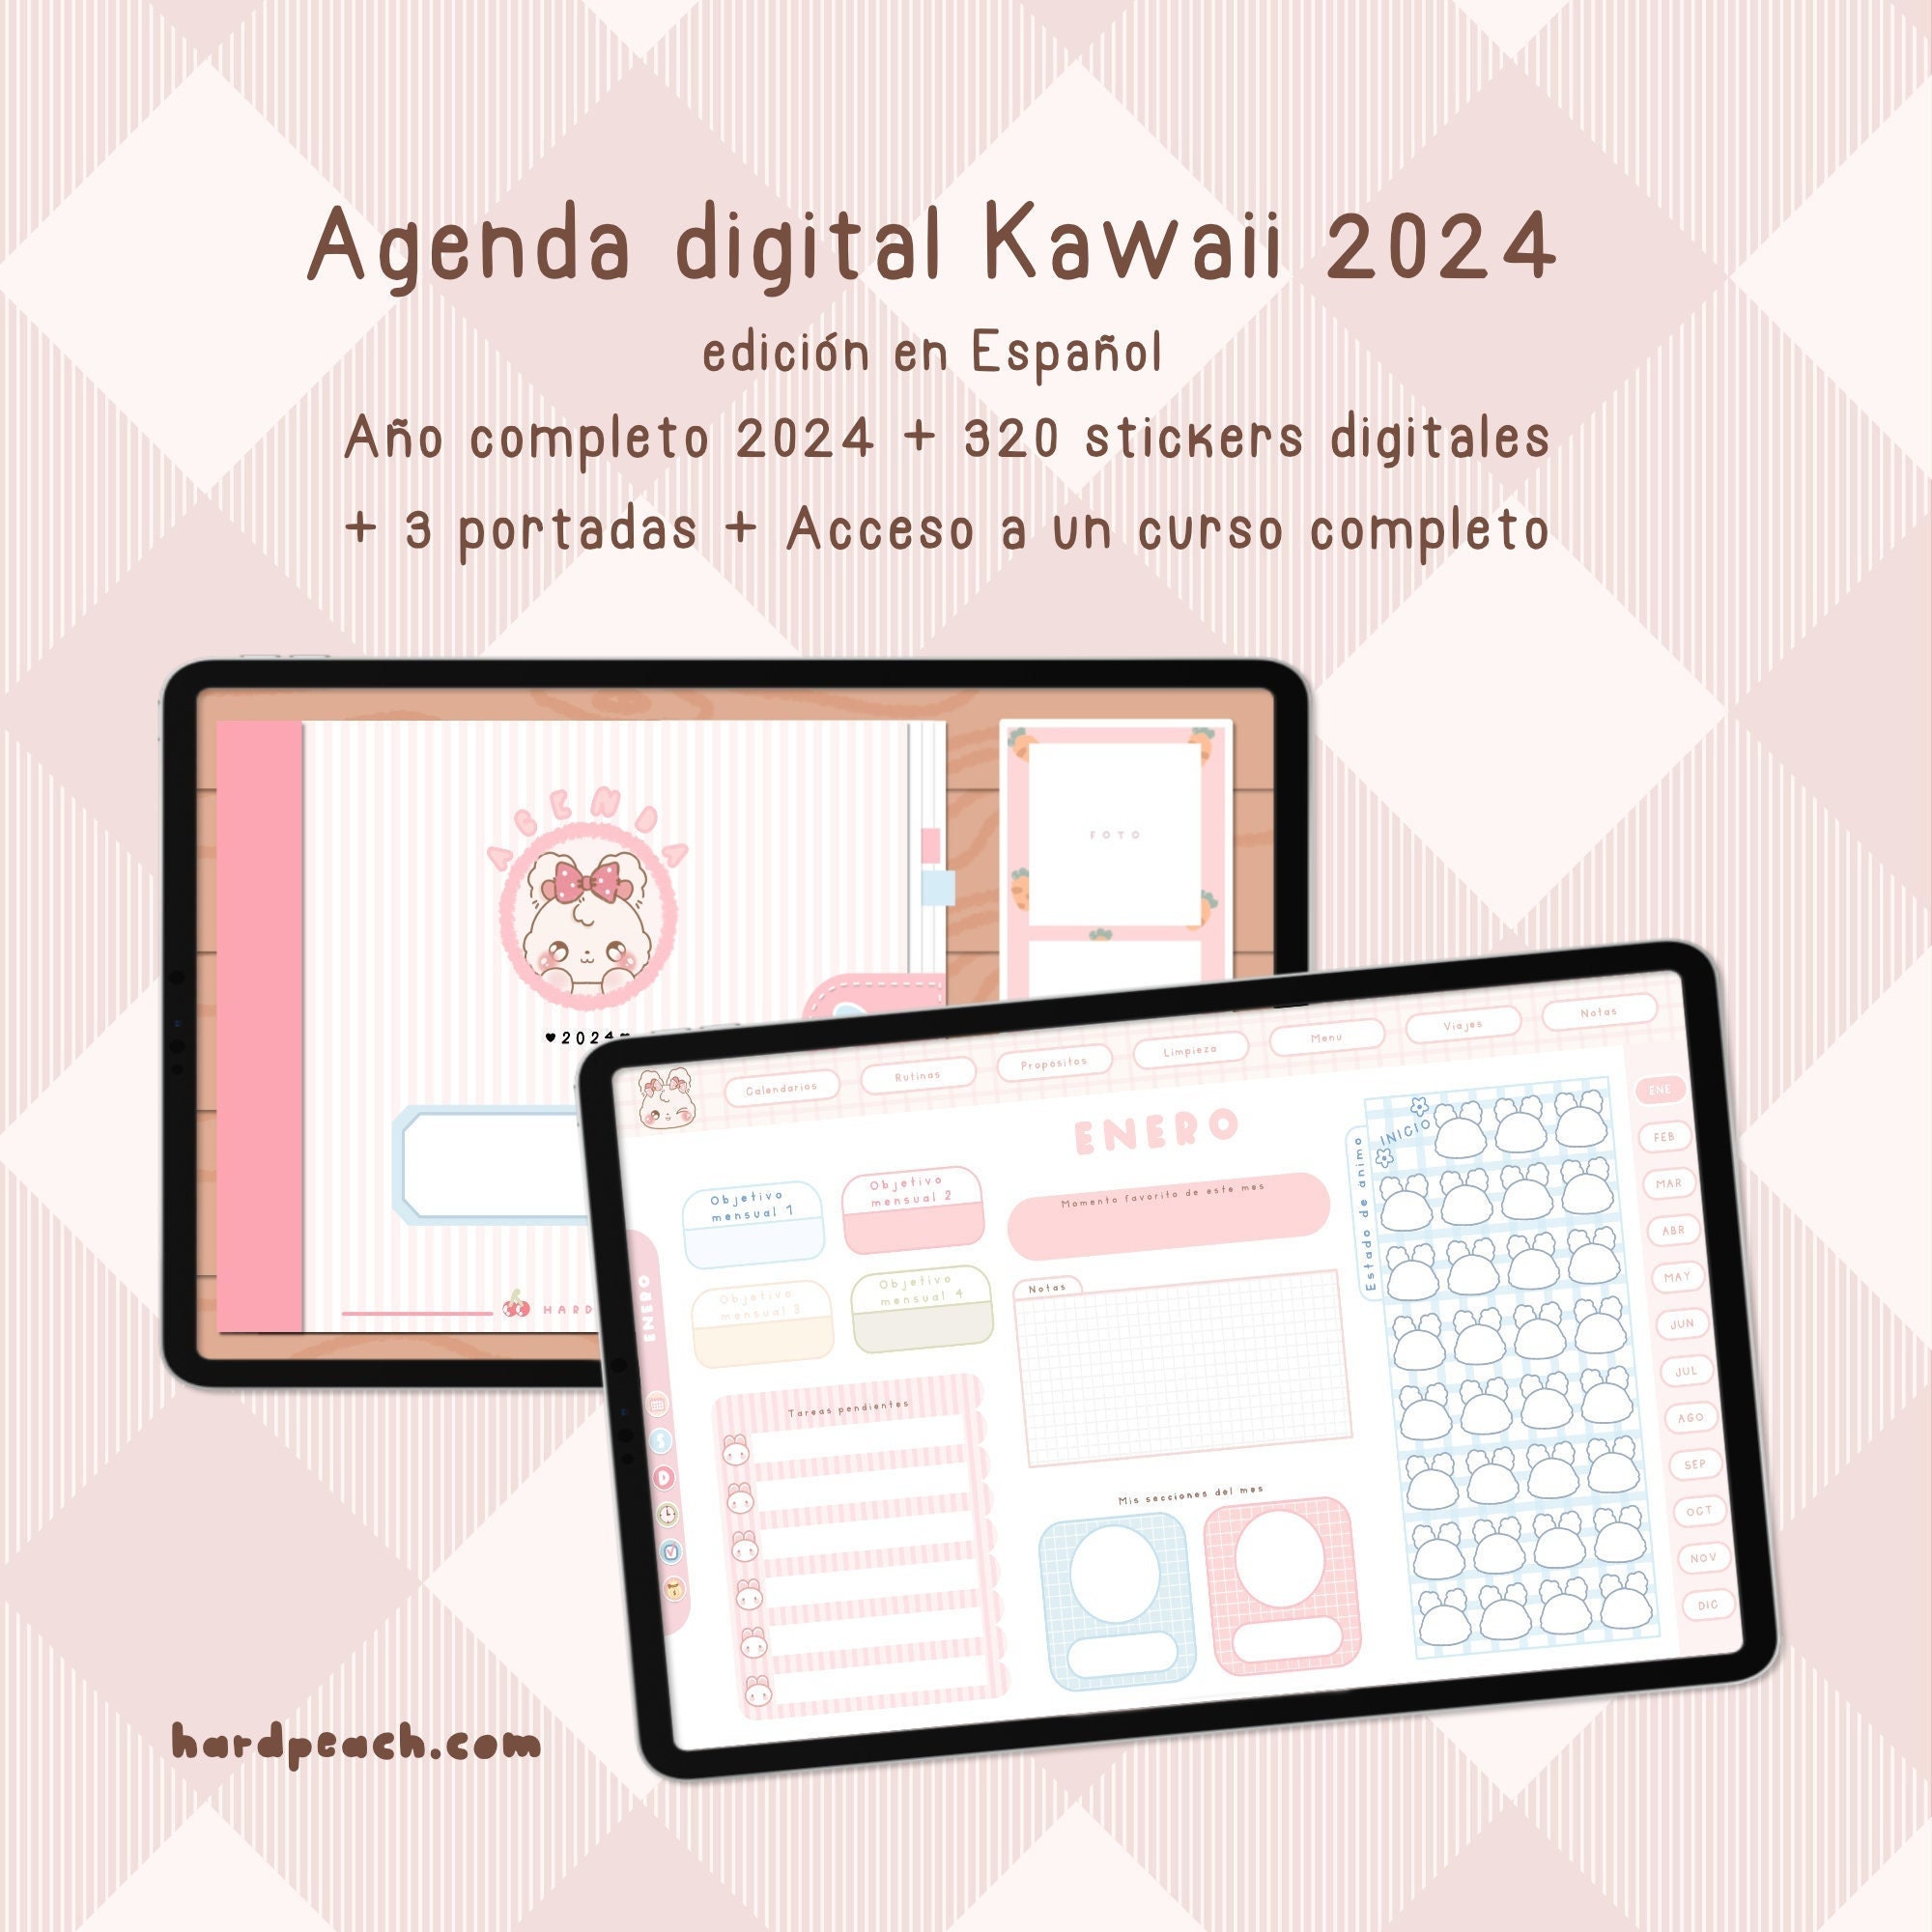 Agenda digital 2024 - BASIC - Español